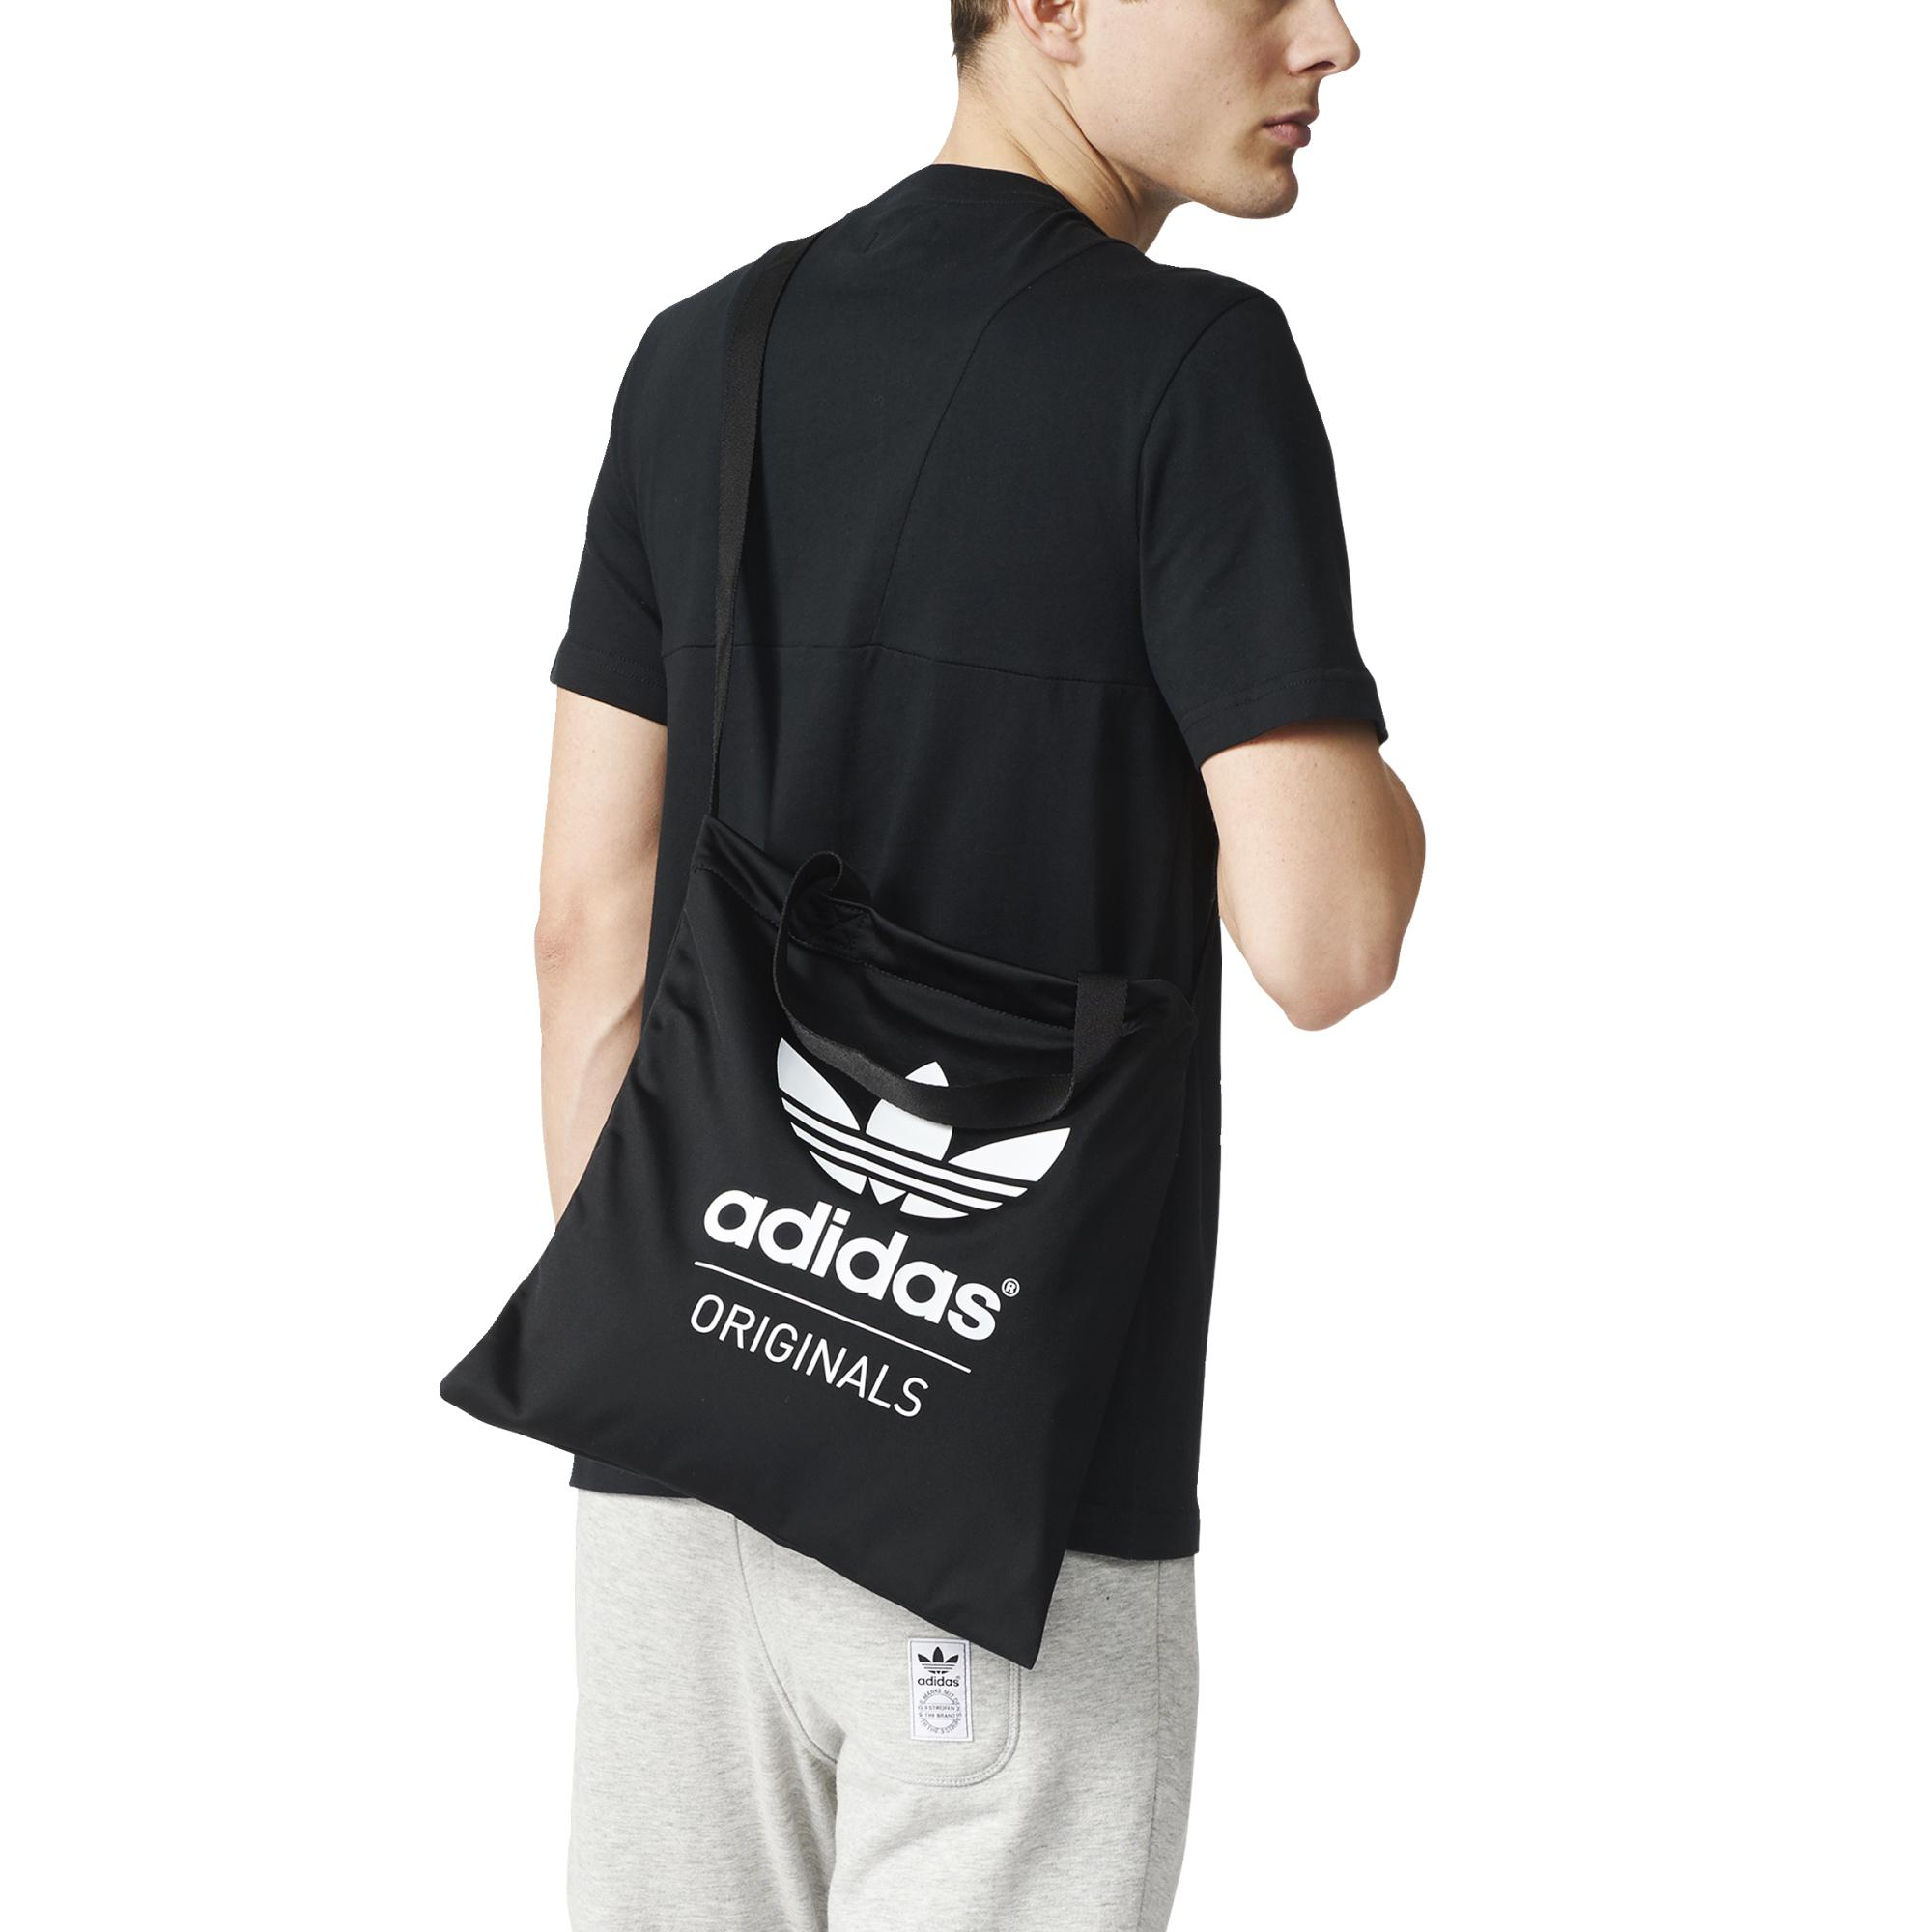 Aventurero sed Funcionar Adidas Originals Bolso Shopper Classic Street (negro/blanco)